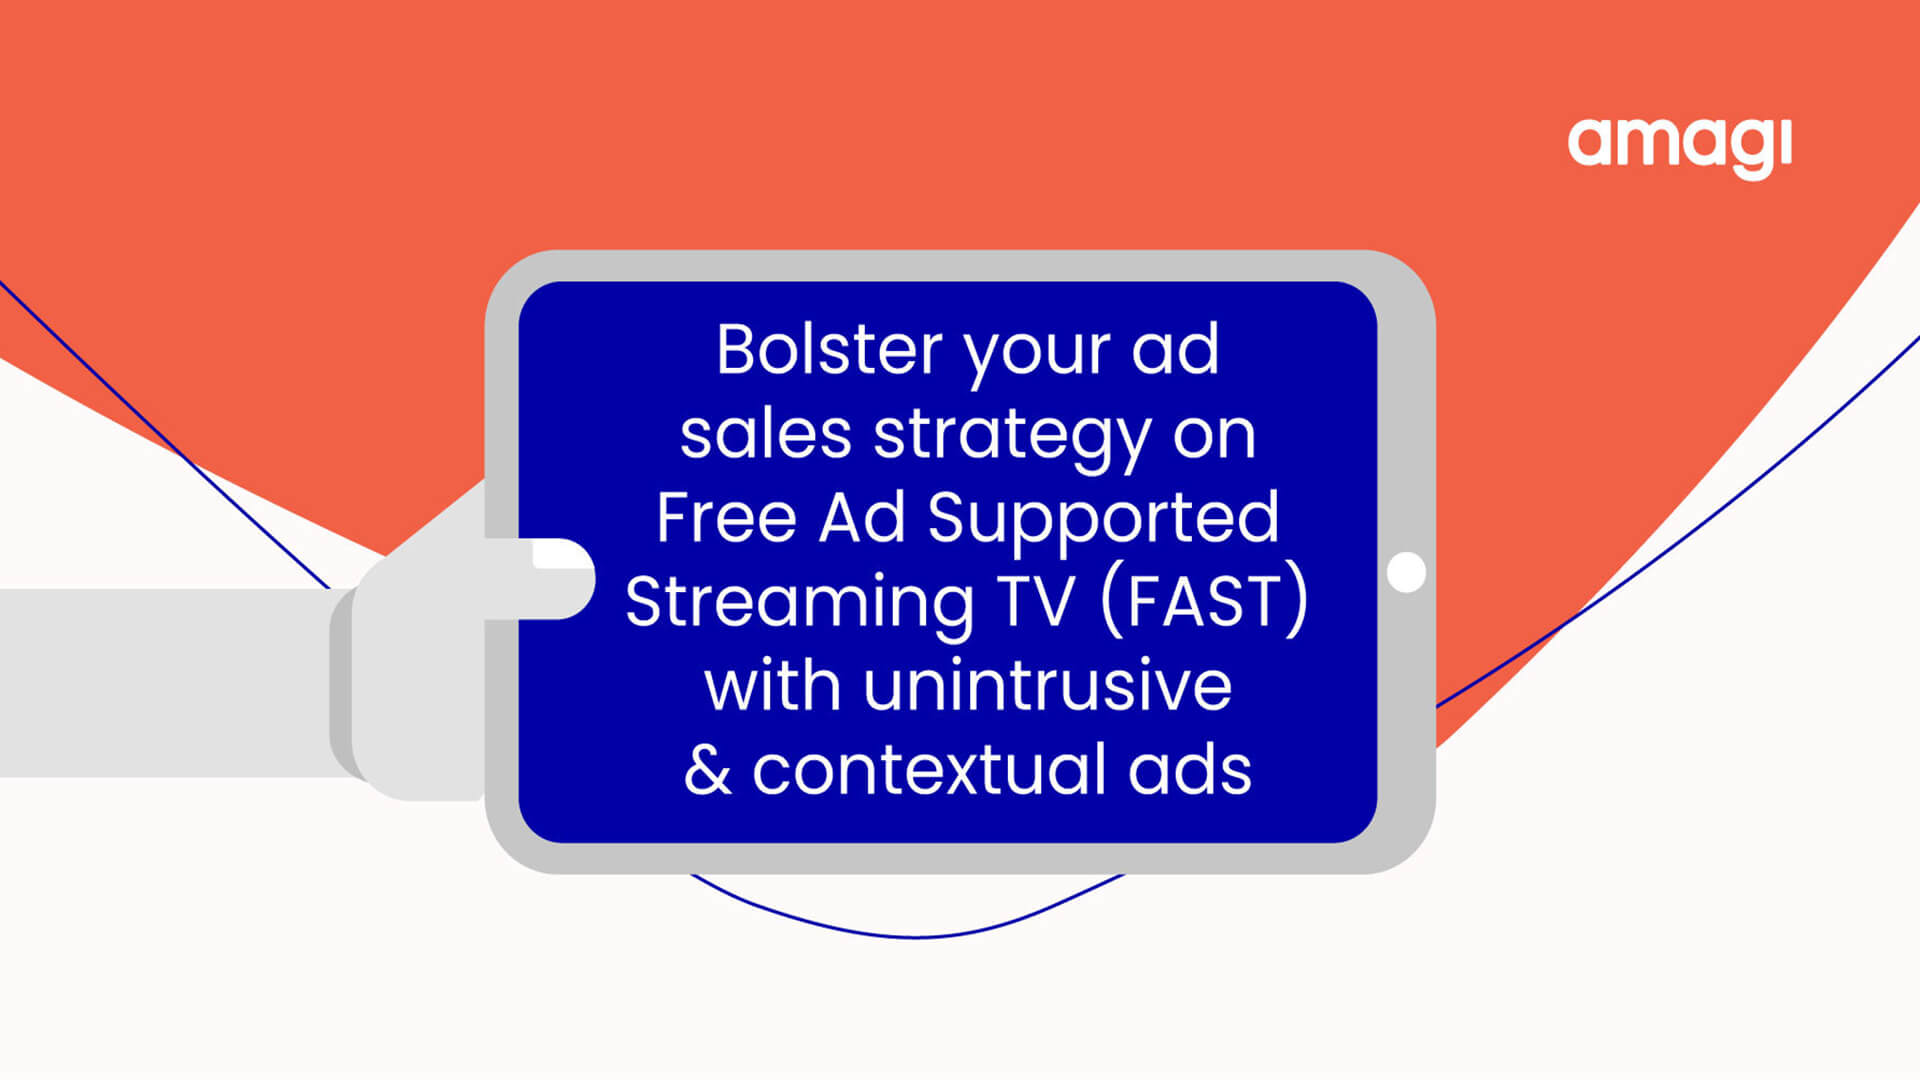 Explore how you can deliver unintrusive, contextual ads